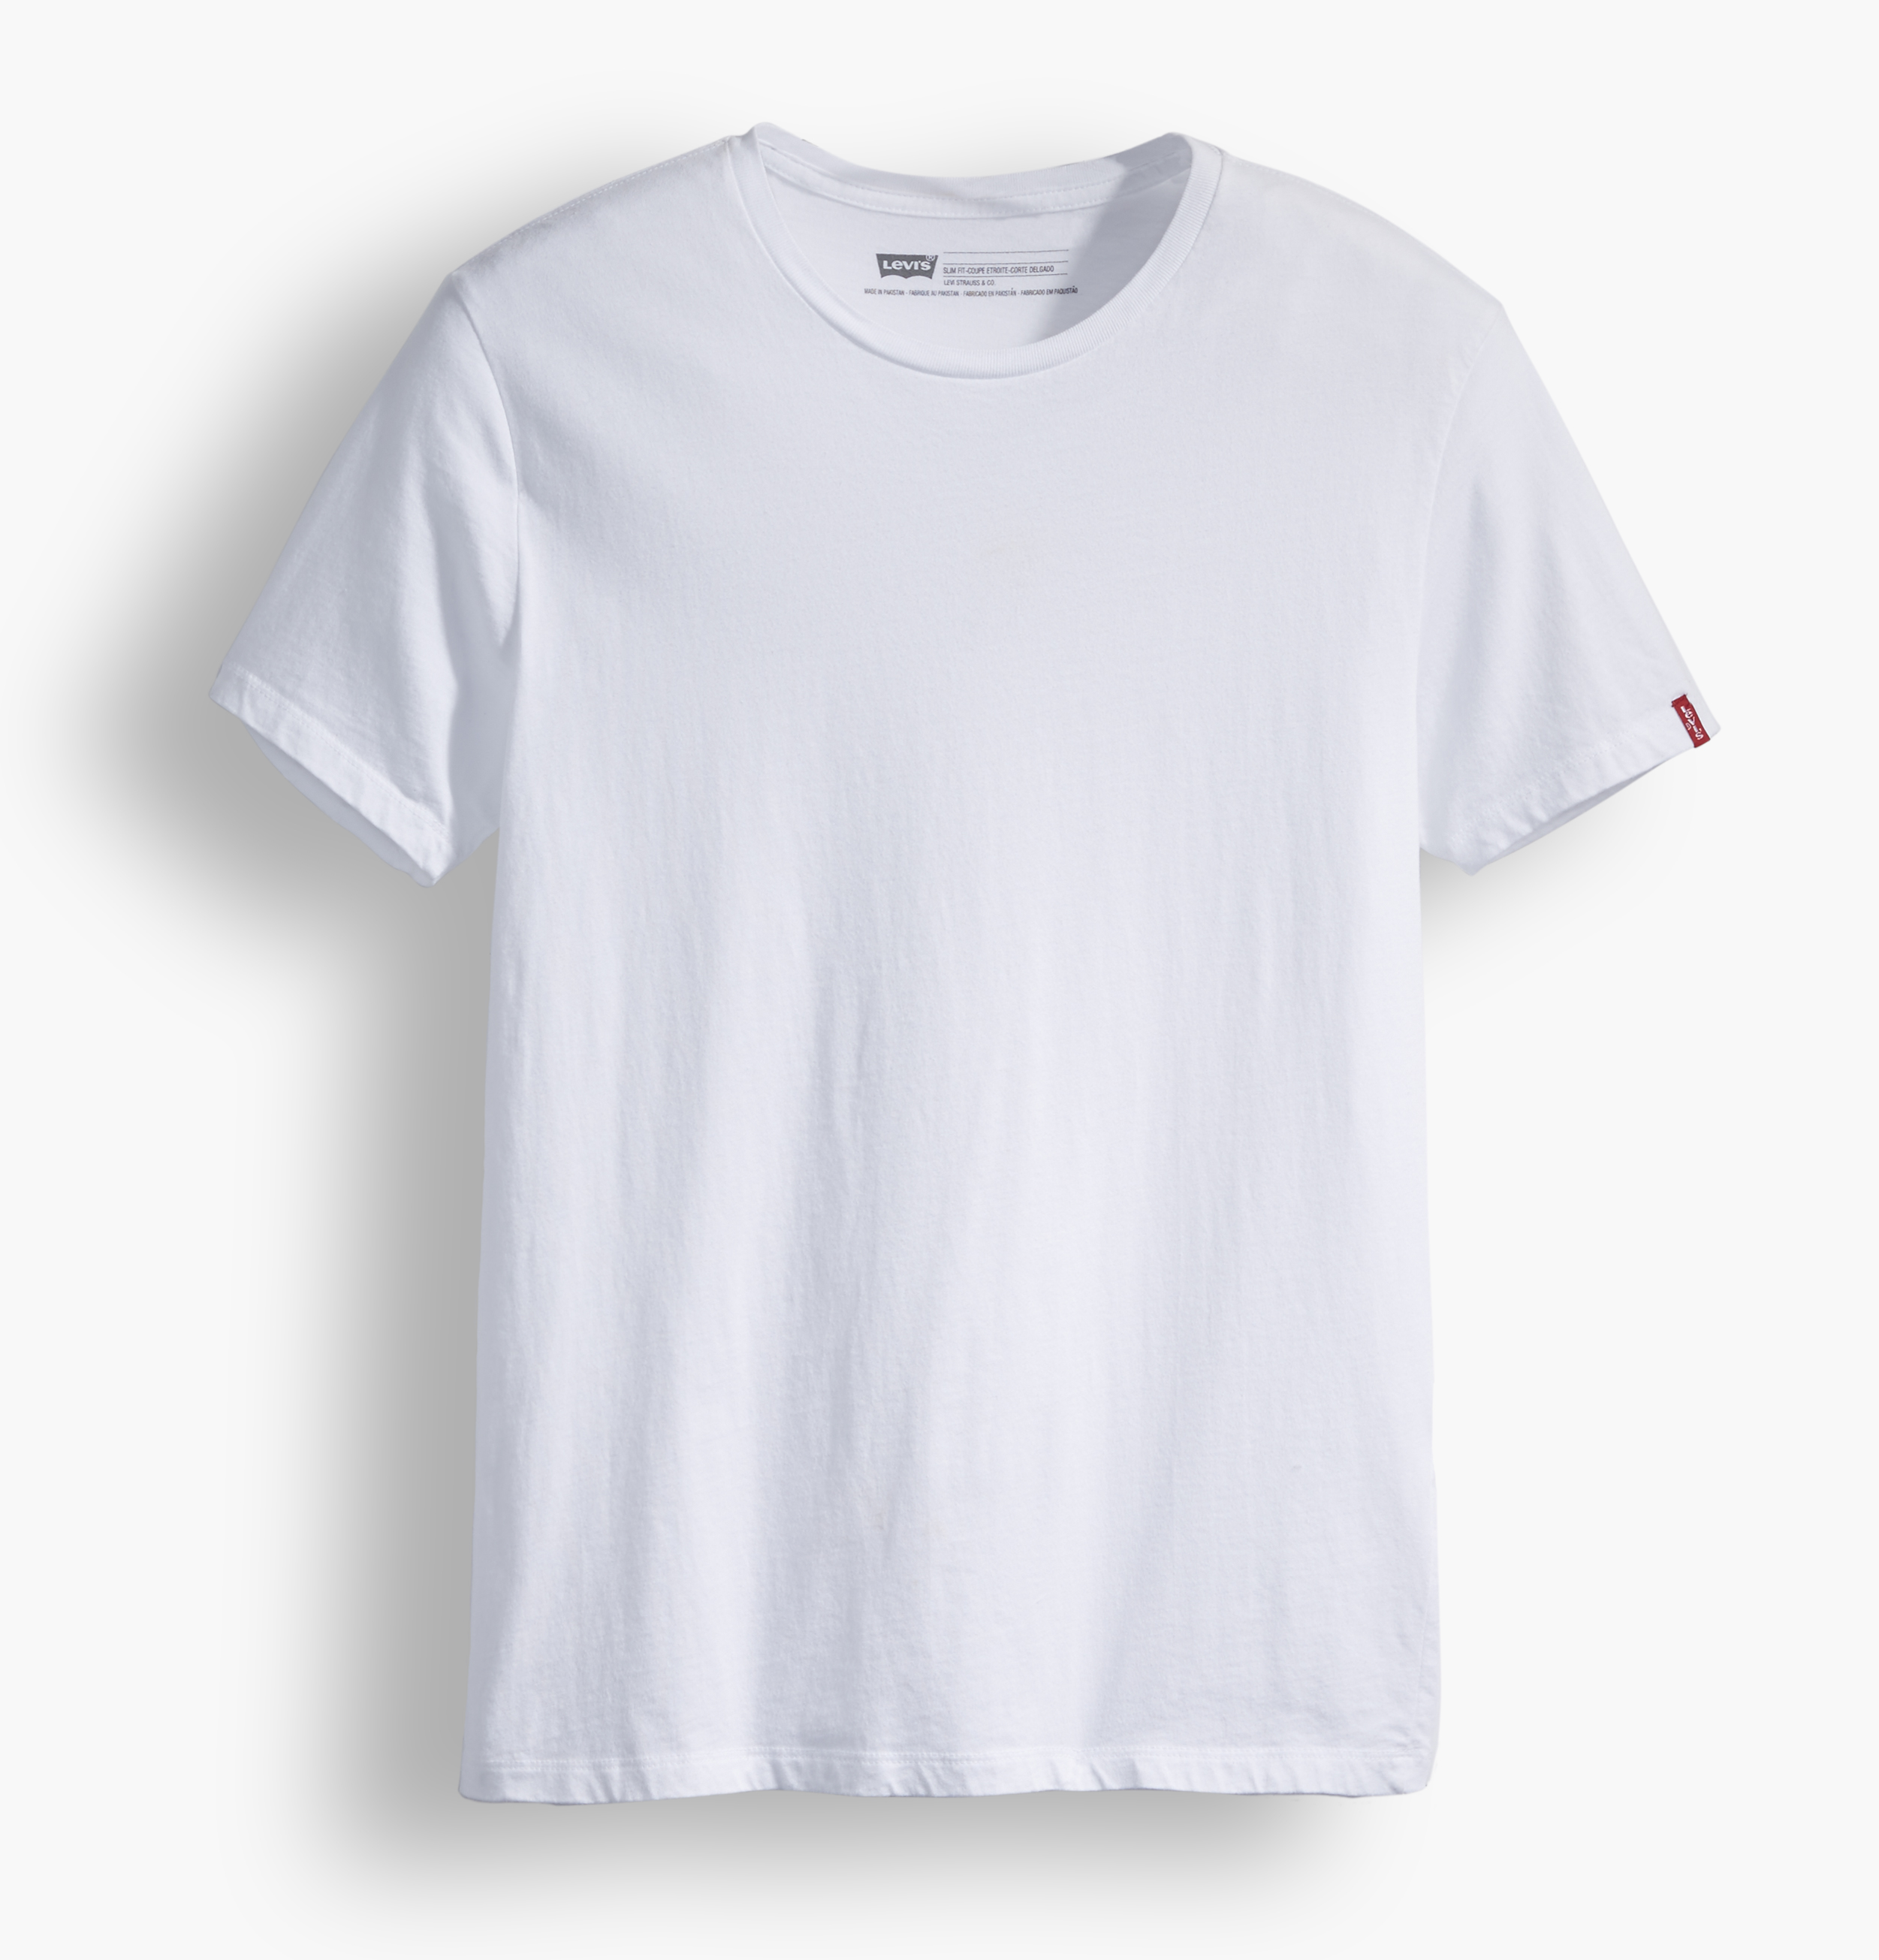 LEVIS 2er Pack Shirts Rundhals T-Shirt 82176-0002 weiß W18-LVT1